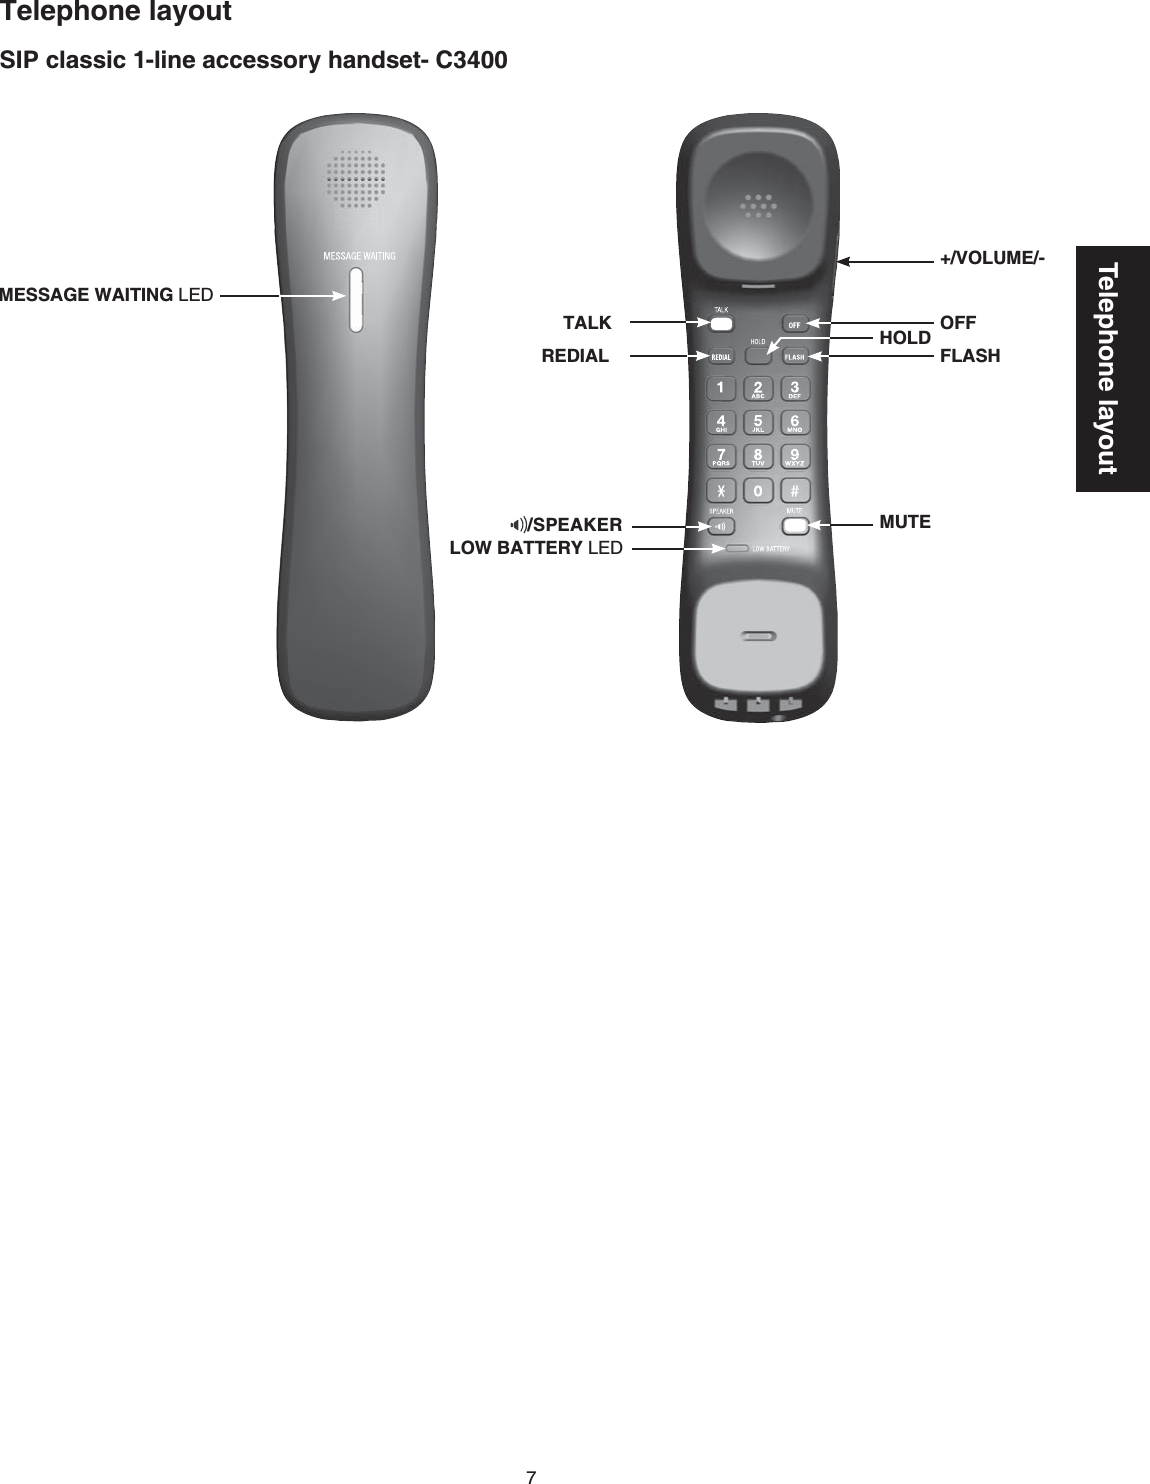 7Telephone layoutSIP classic 1-line accessory handset- C3400Telephone layoutTALKREDIAL HOLD OFFFLASHLOW BATTERY.&apos;&amp;MUTE+/VOLUME/-MESSAGE WAITING.&apos;&amp;/SPEAKER